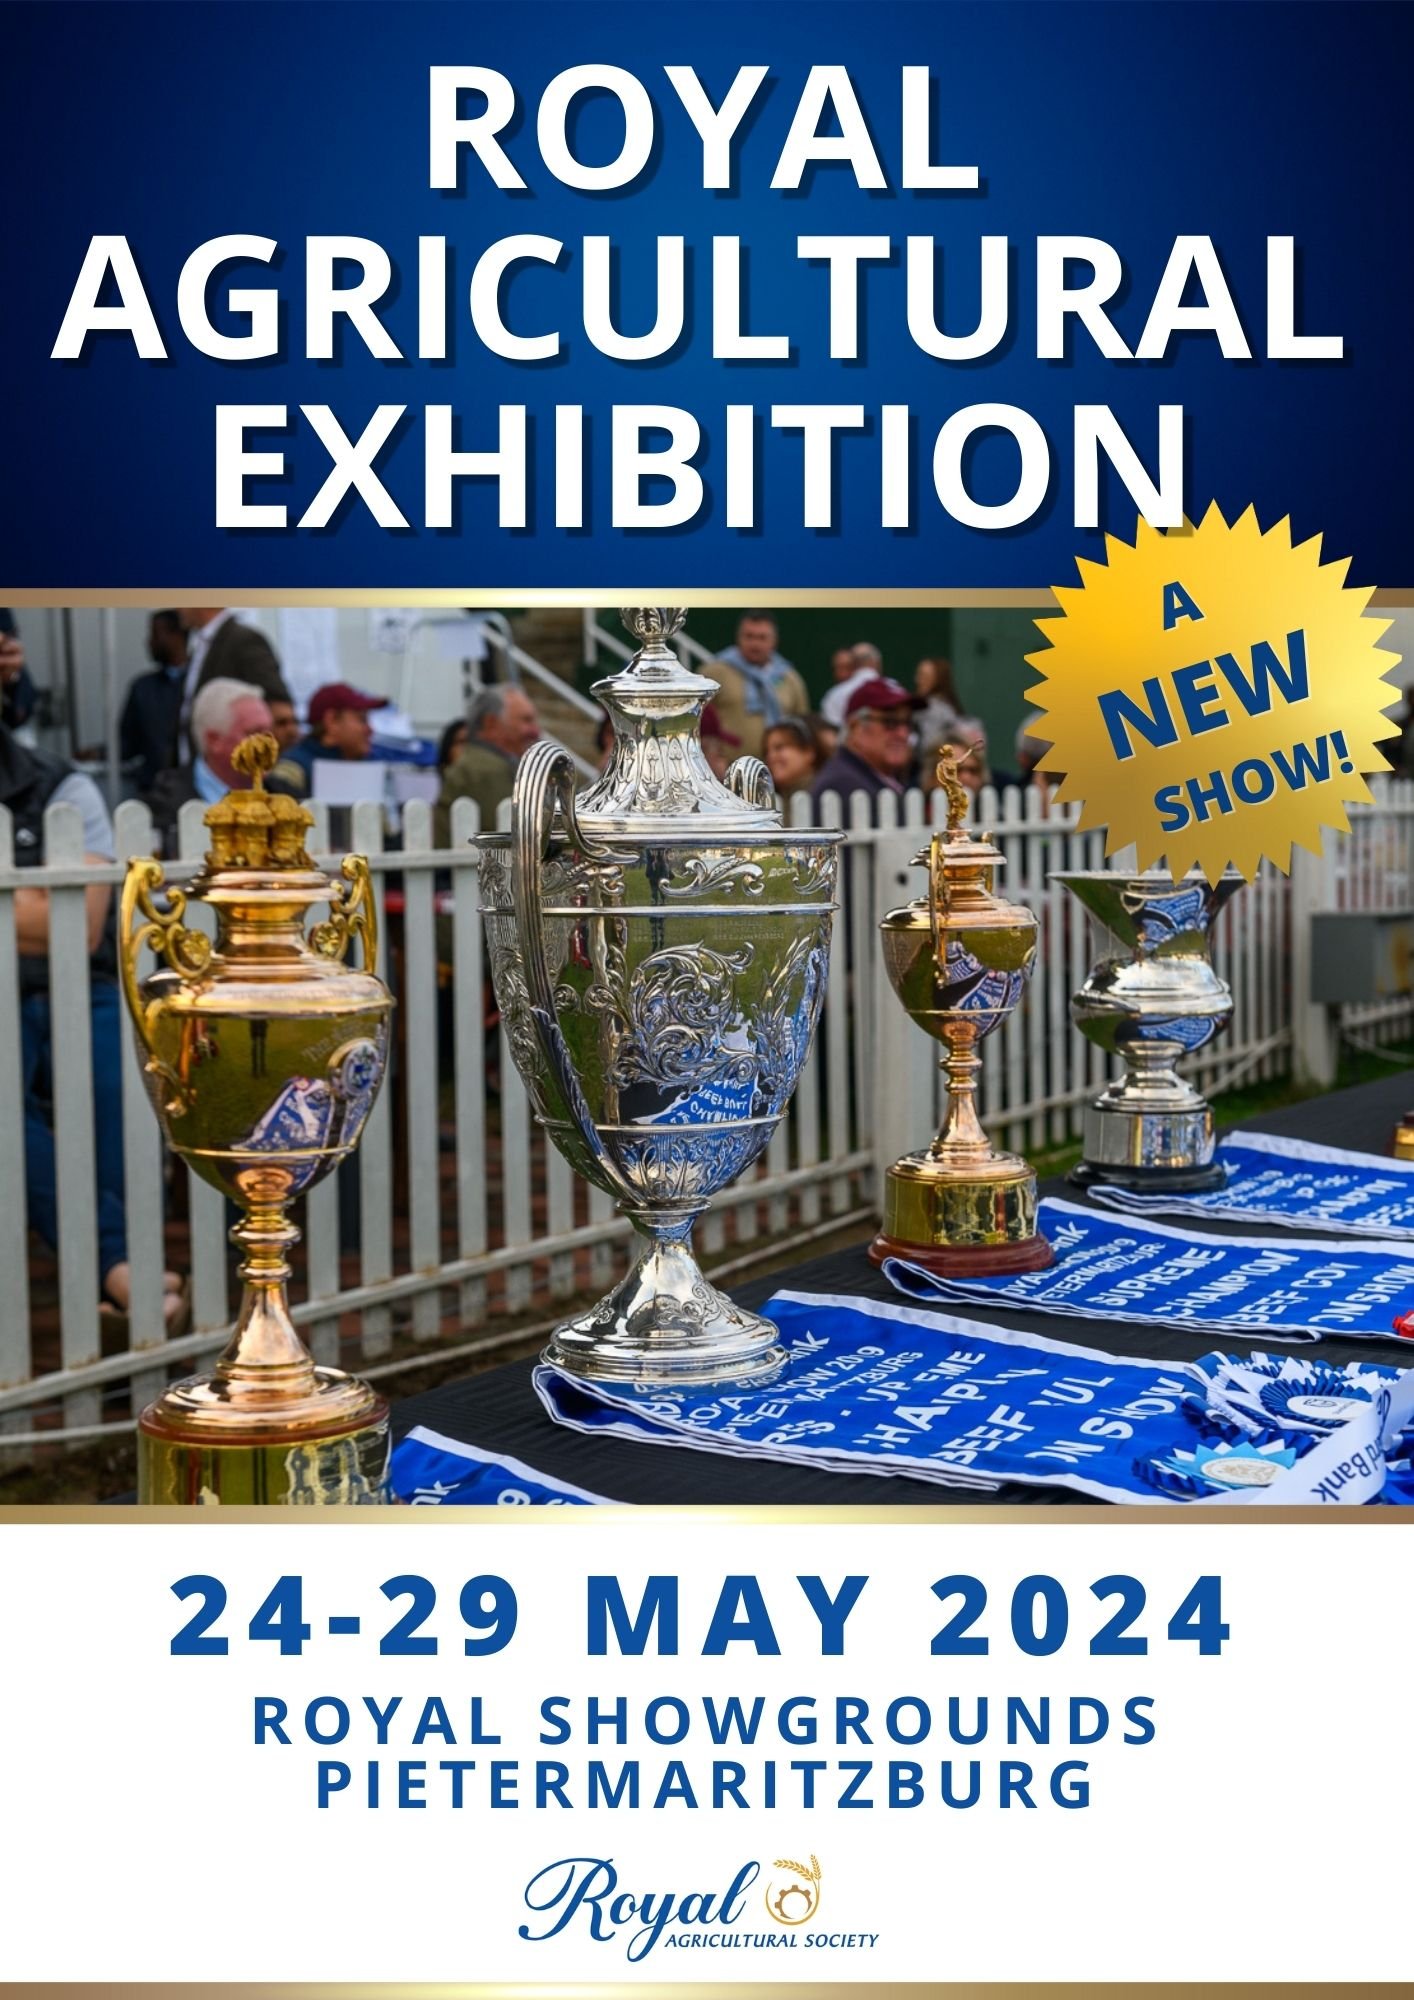 royal-agricultural-exhibition-may-2024-3.jpg